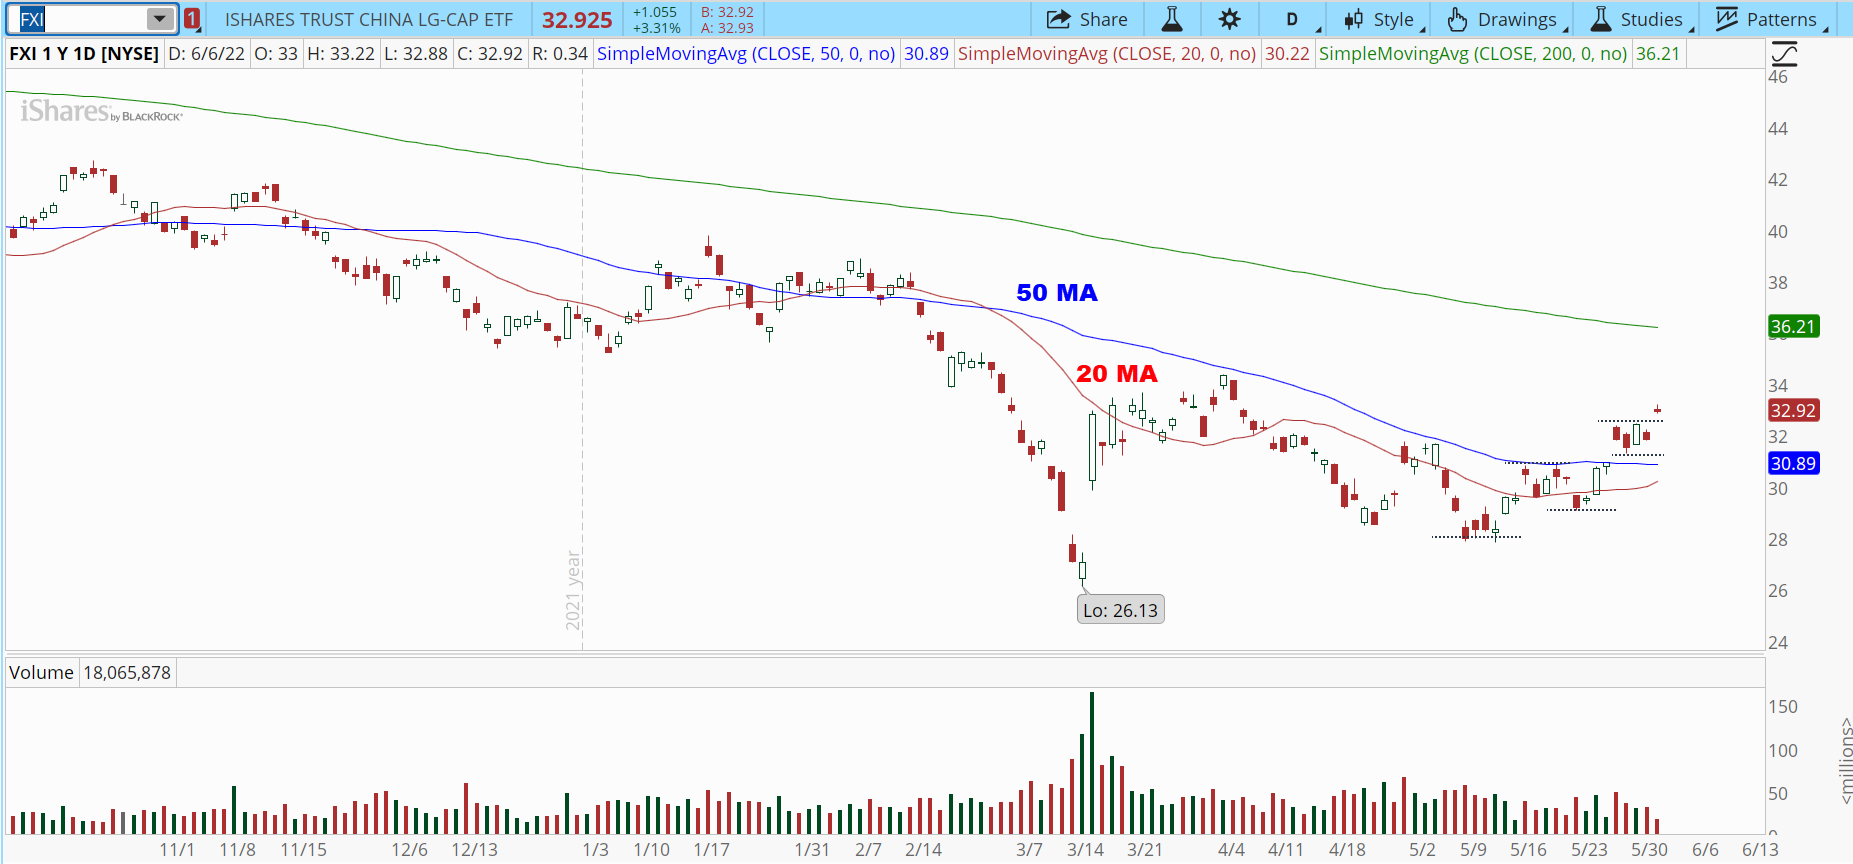 iShares China Large-Cap ETF (FXI) stock chart with bullish trend reversal